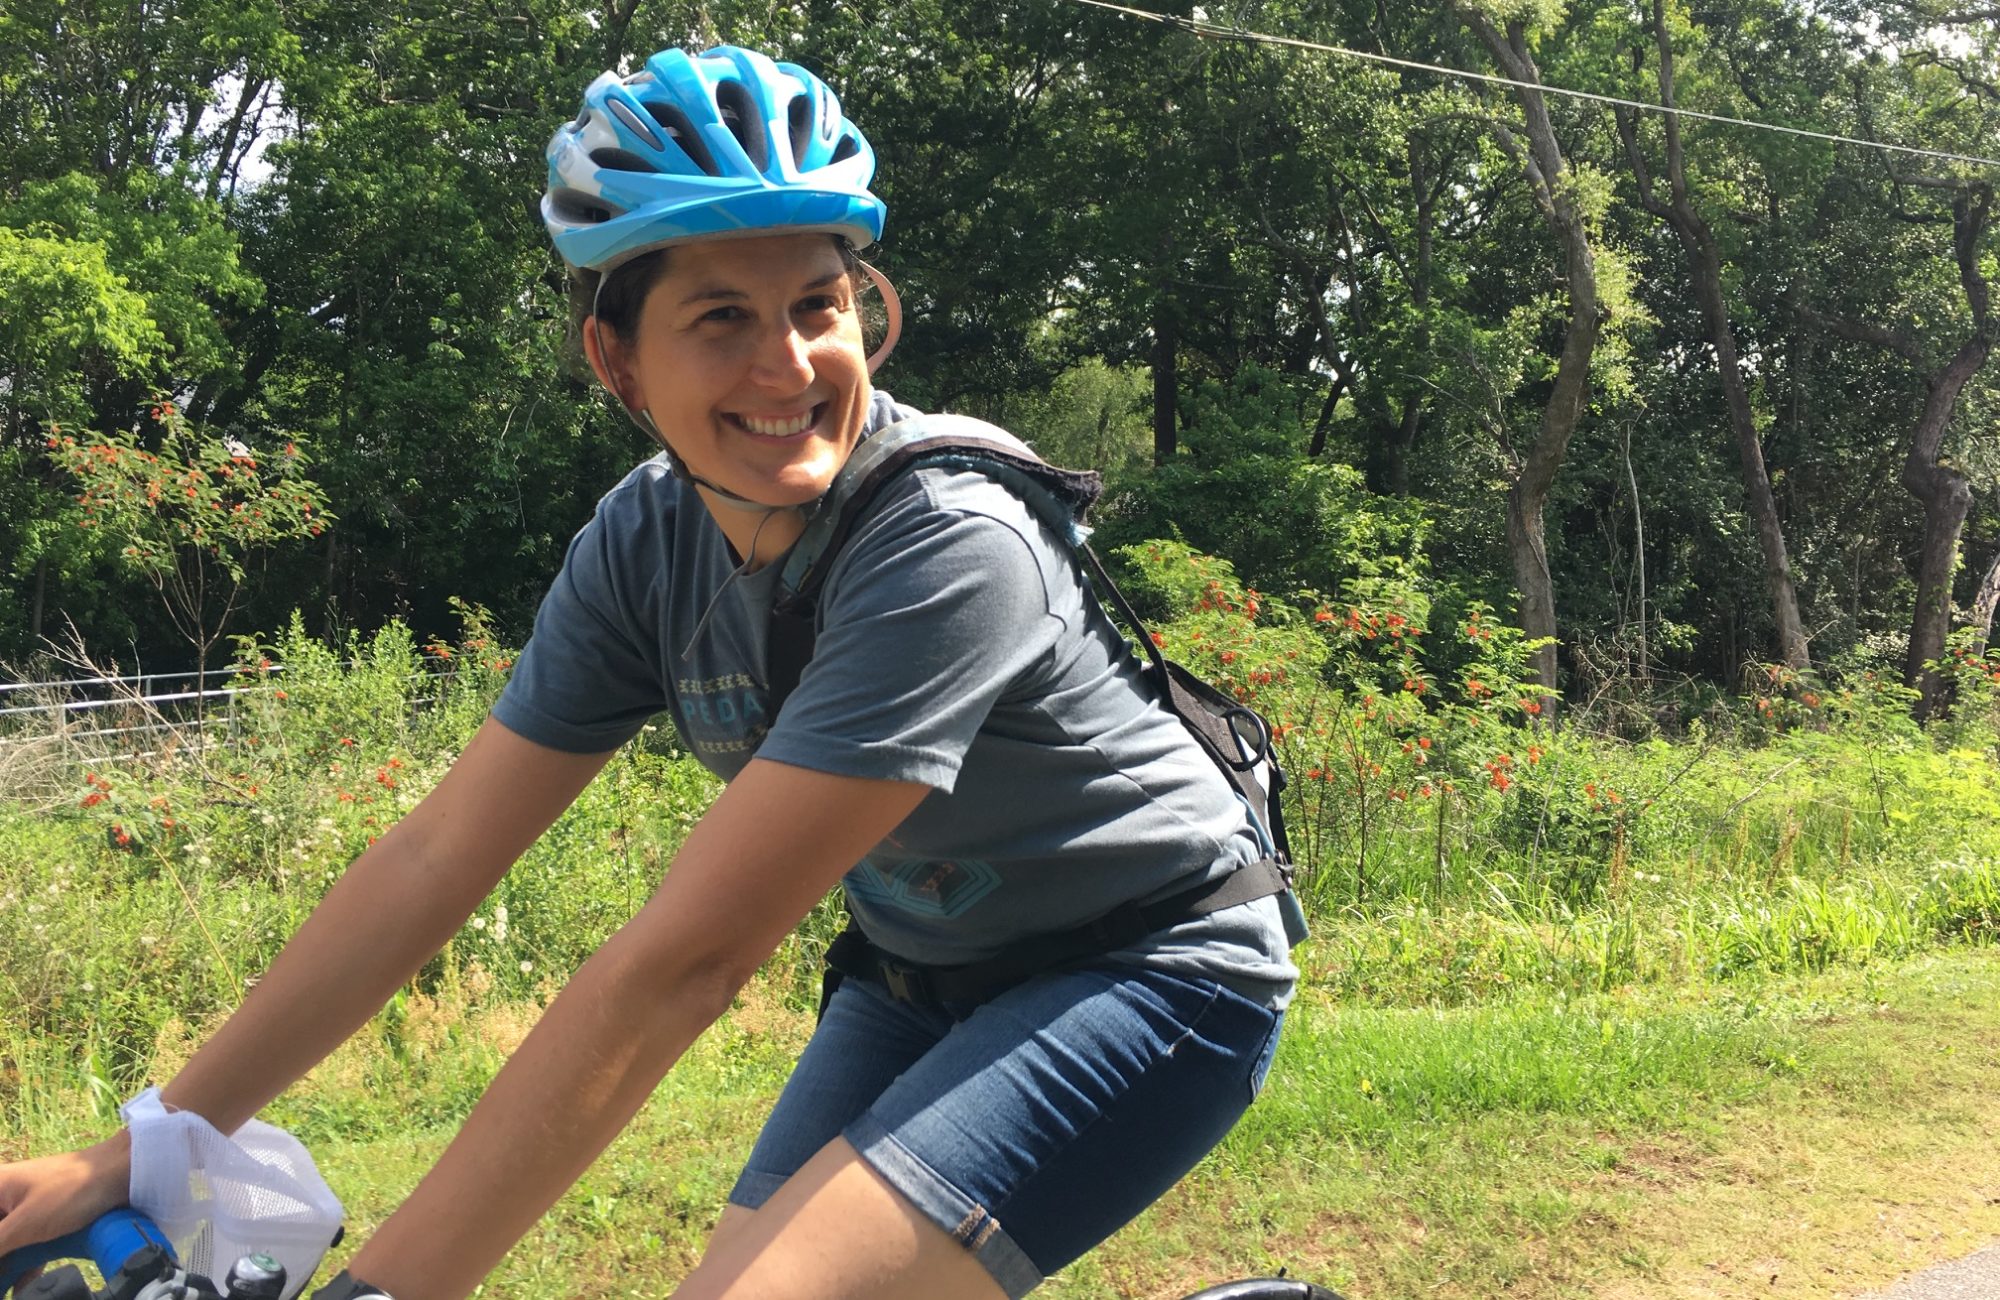 Women on Bikes Charleston Moves